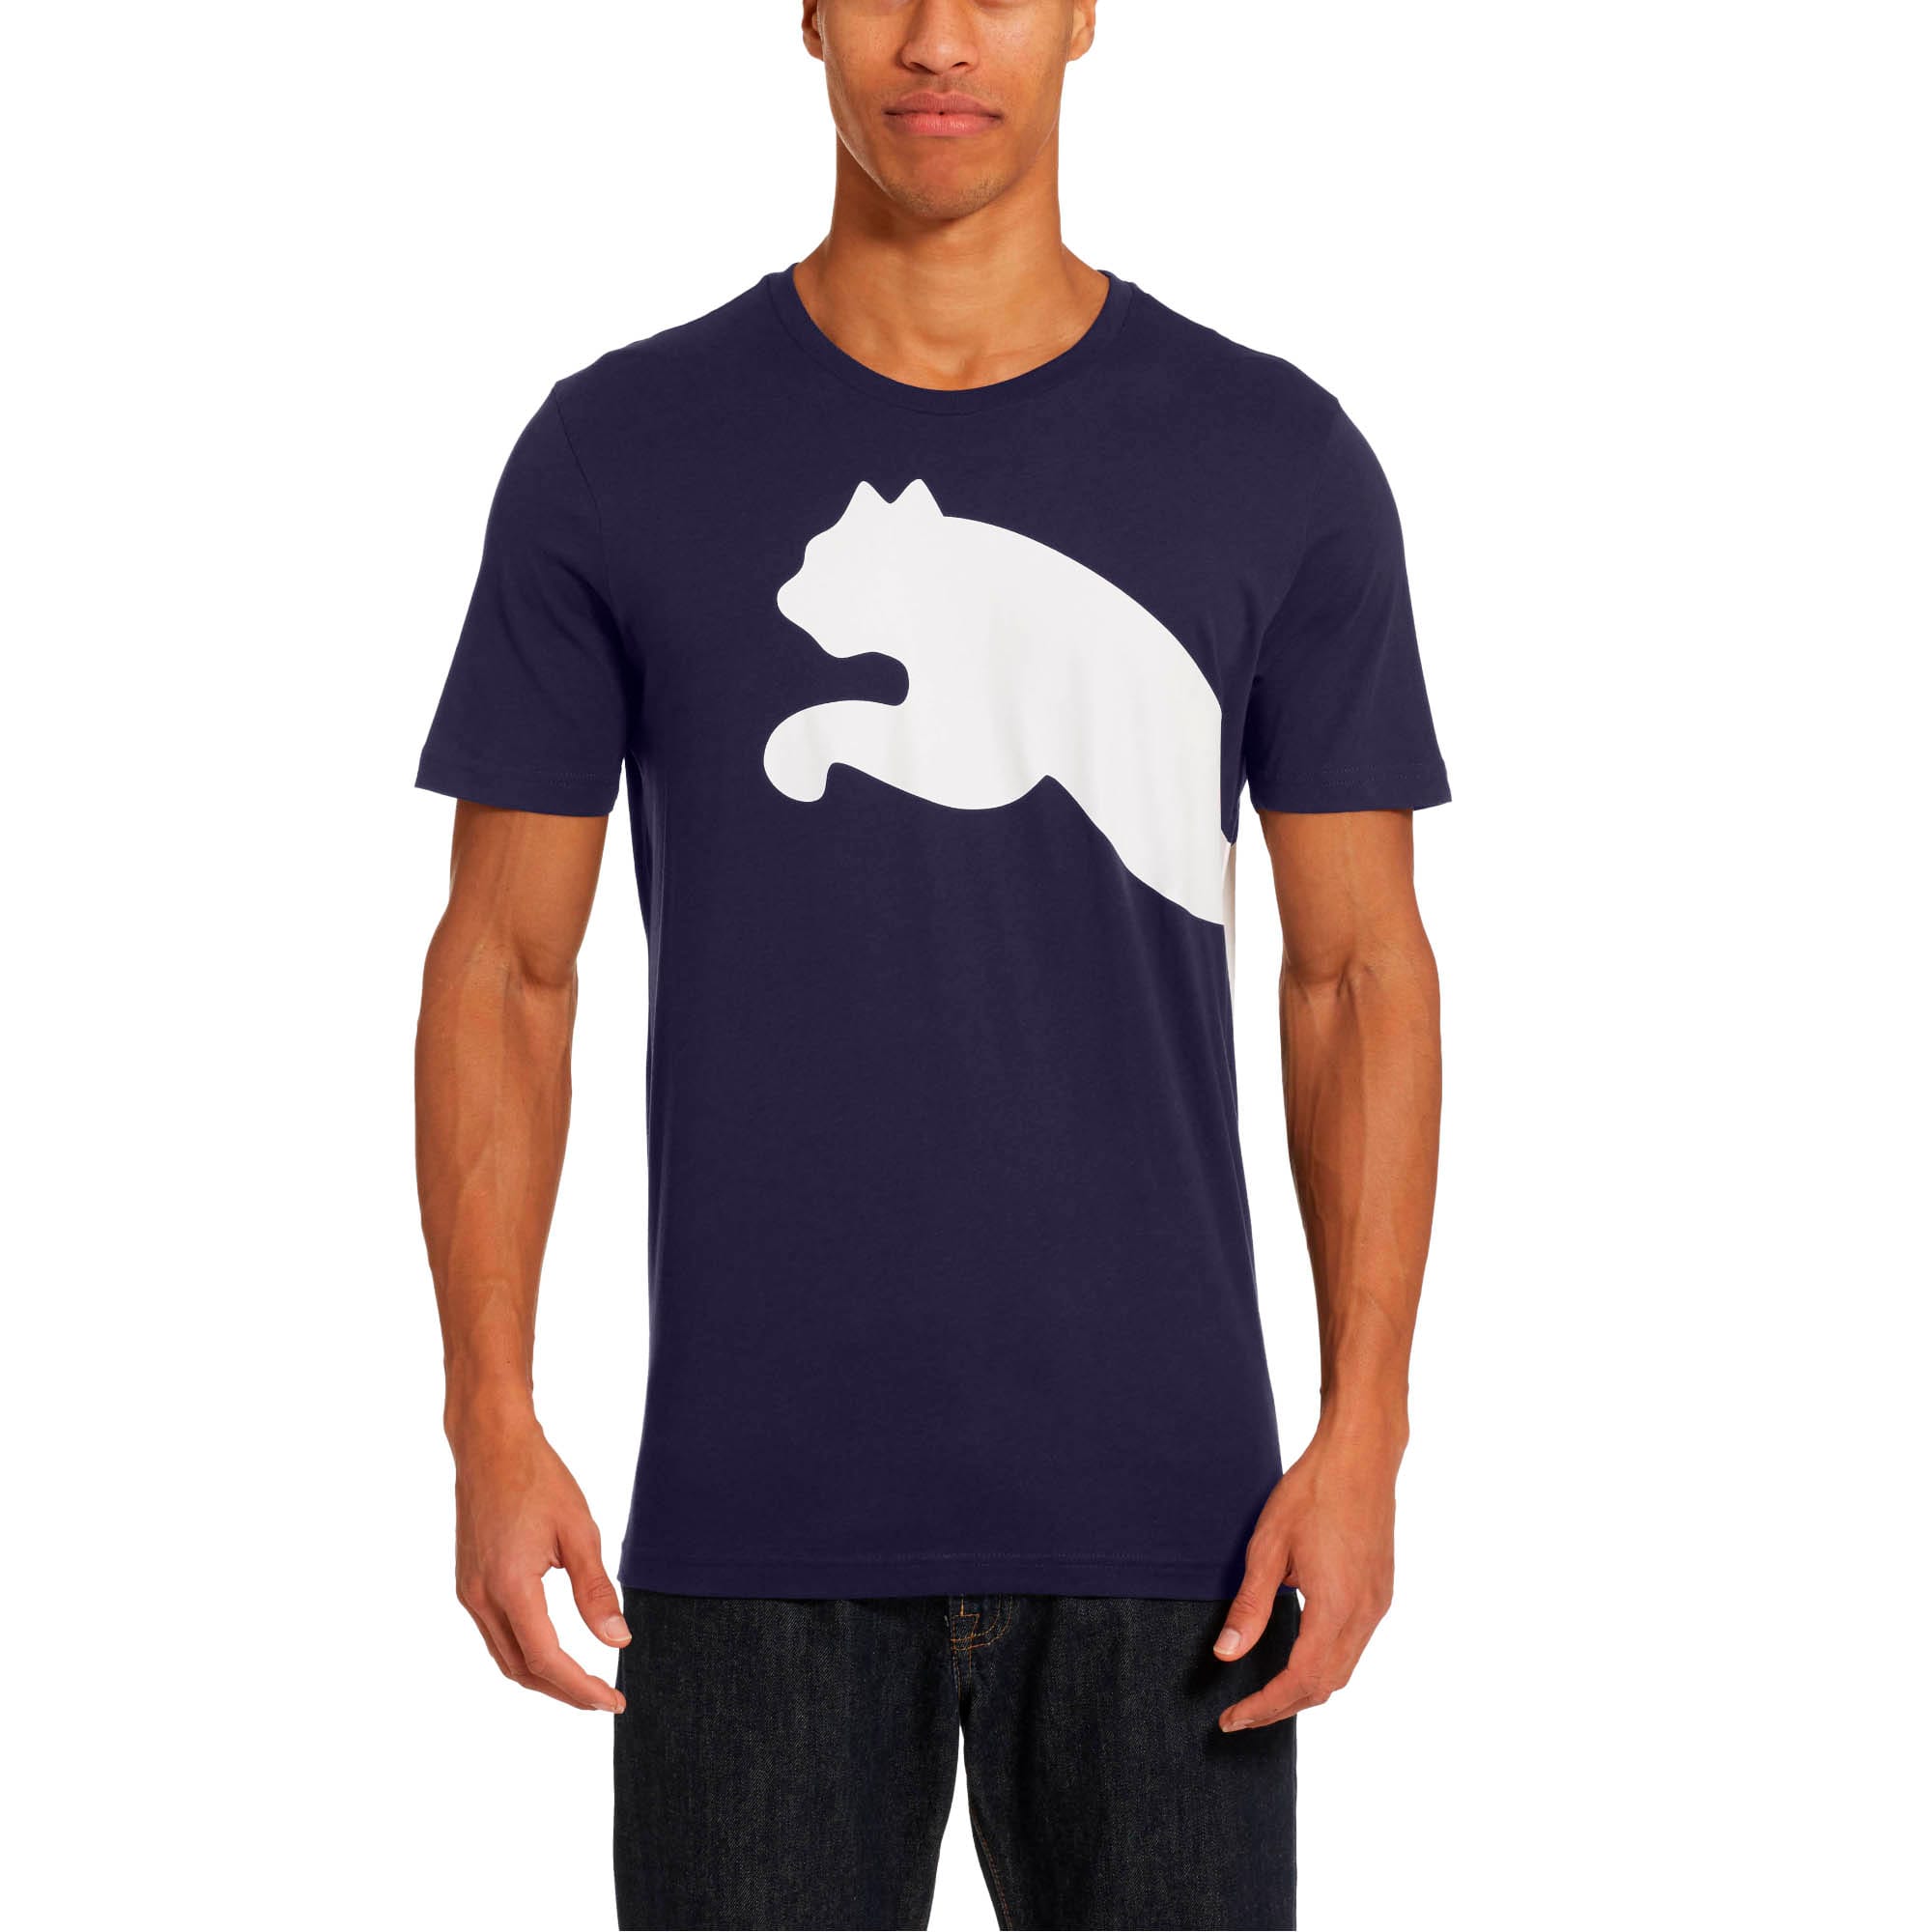 puma oversize logo t shirt